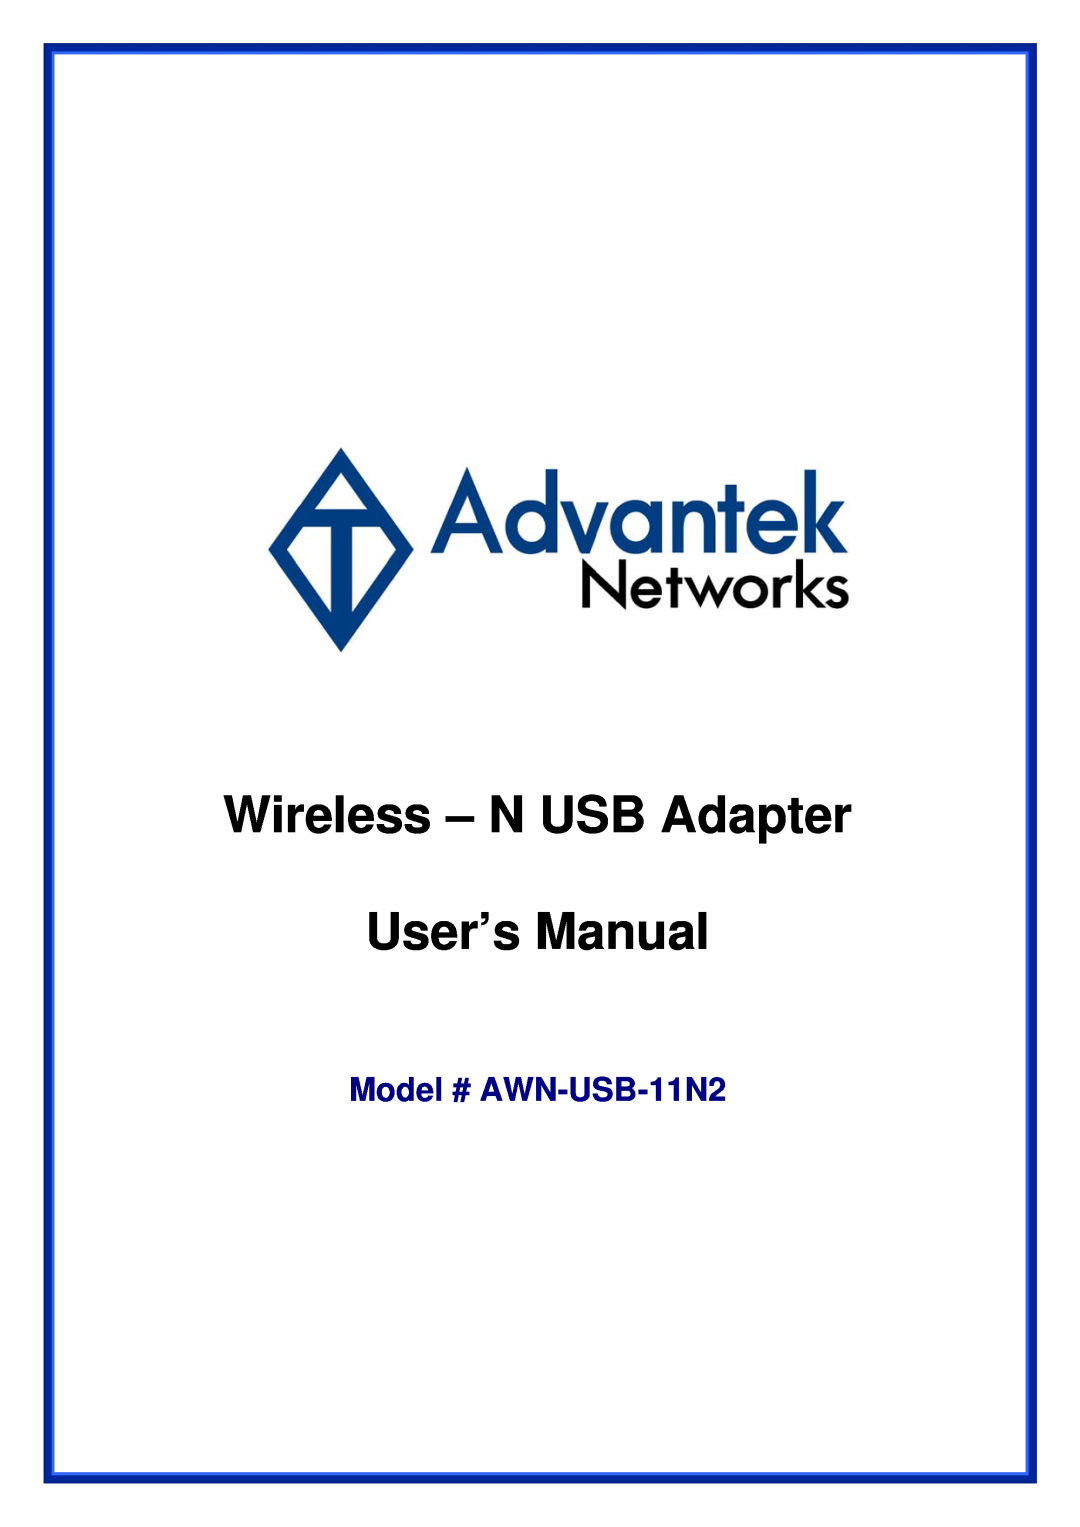 Advantek Networks user manual Wireless - N USB Adapter, User’s Manual, Model # AWN-USB-11N2 